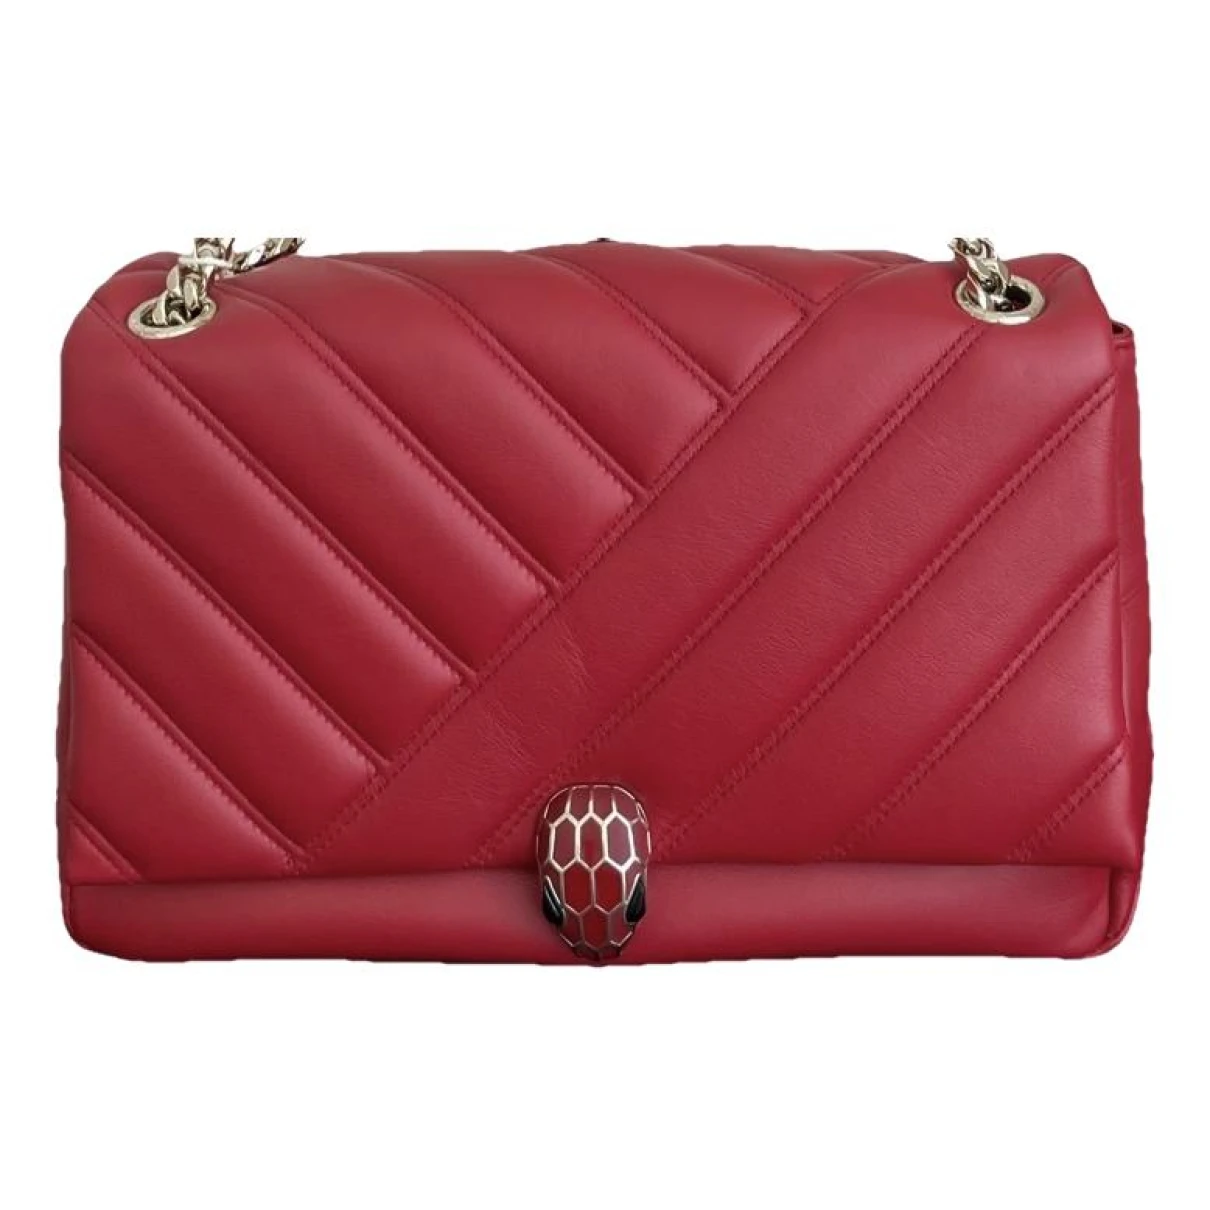 Pre-owned Bvlgari Serpenti Leather Handbag In Red